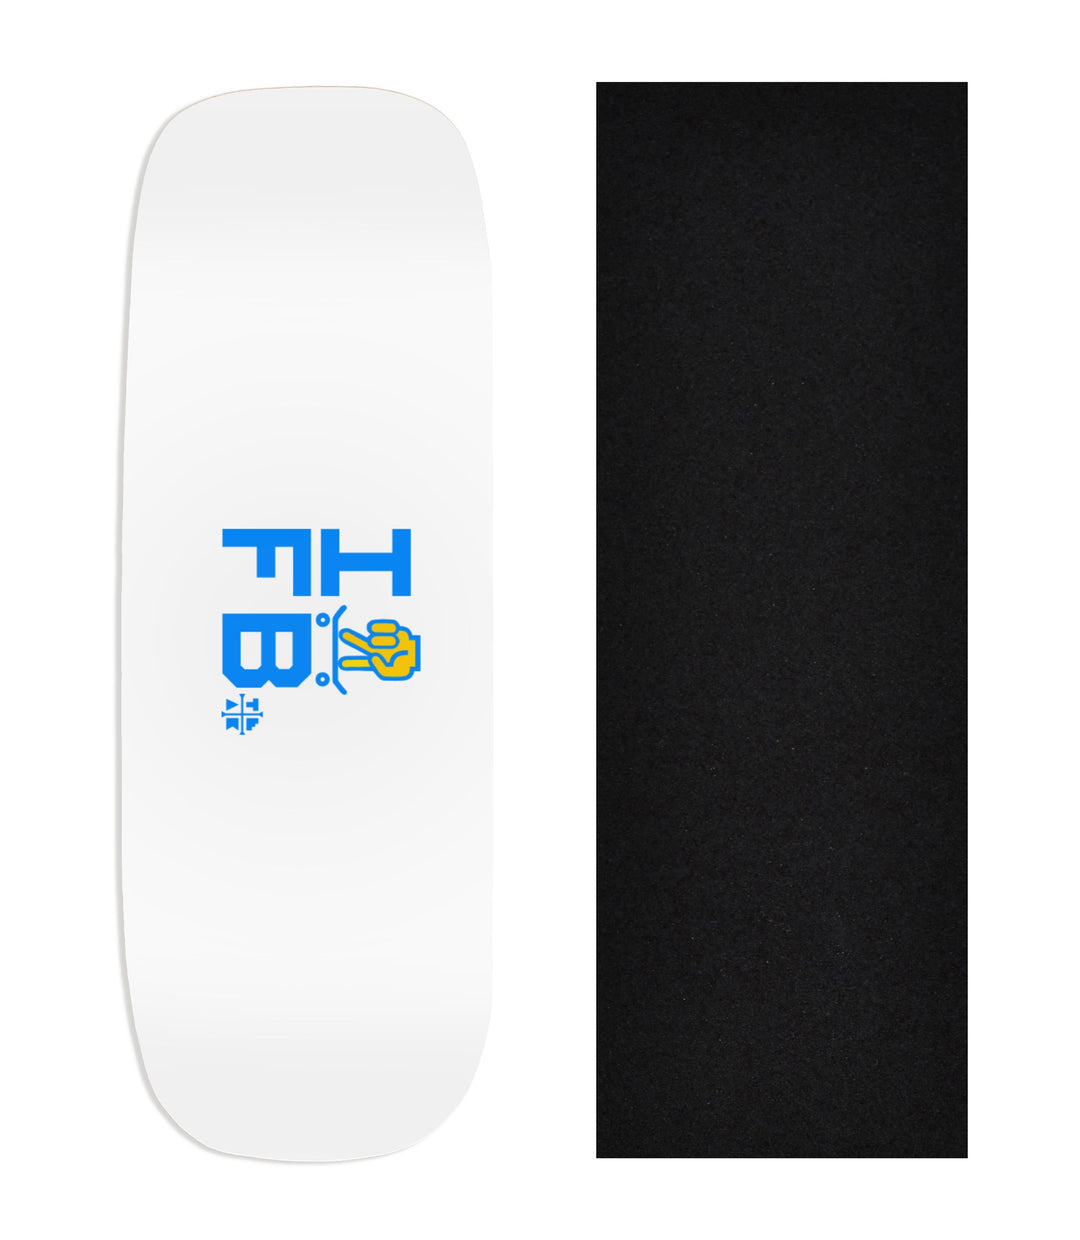 Teak Tuning Heat Transfer Graphic Wooden Fingerboard Deck, "I [SKATE] FB" (White) Boxy Deck